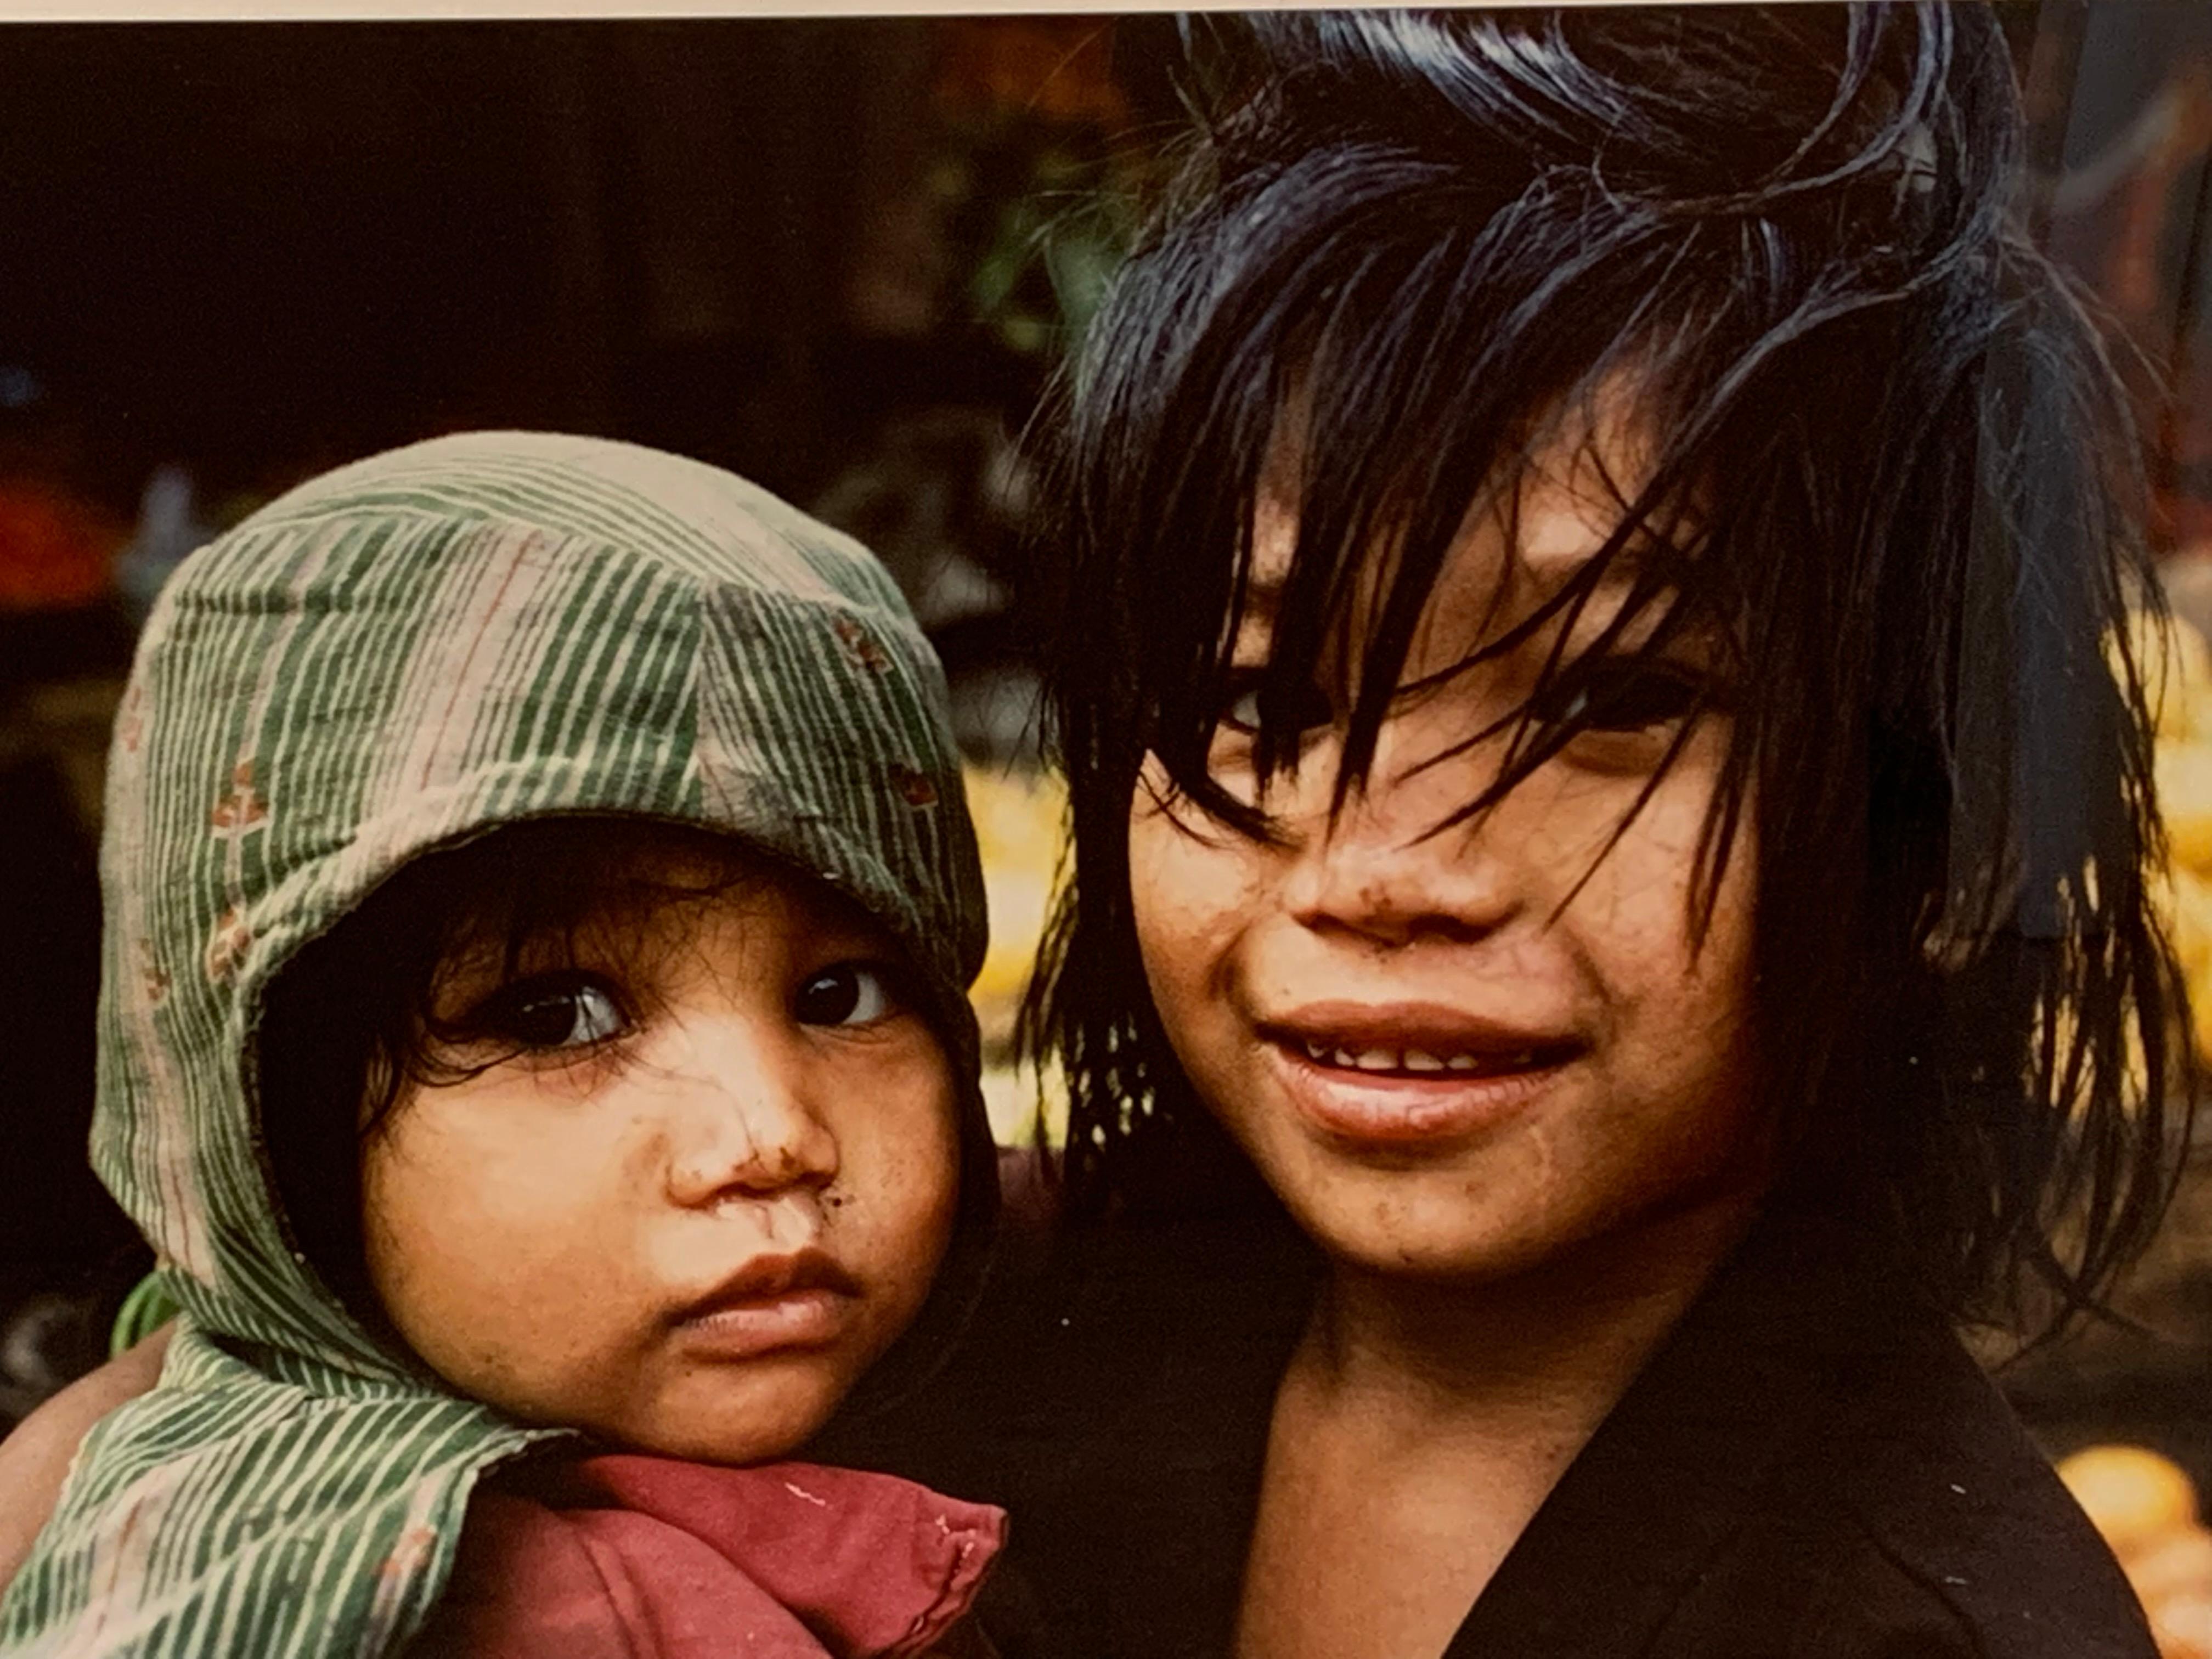 Betty Gold Color Photograph - V.O.W. Nepal II (1985)